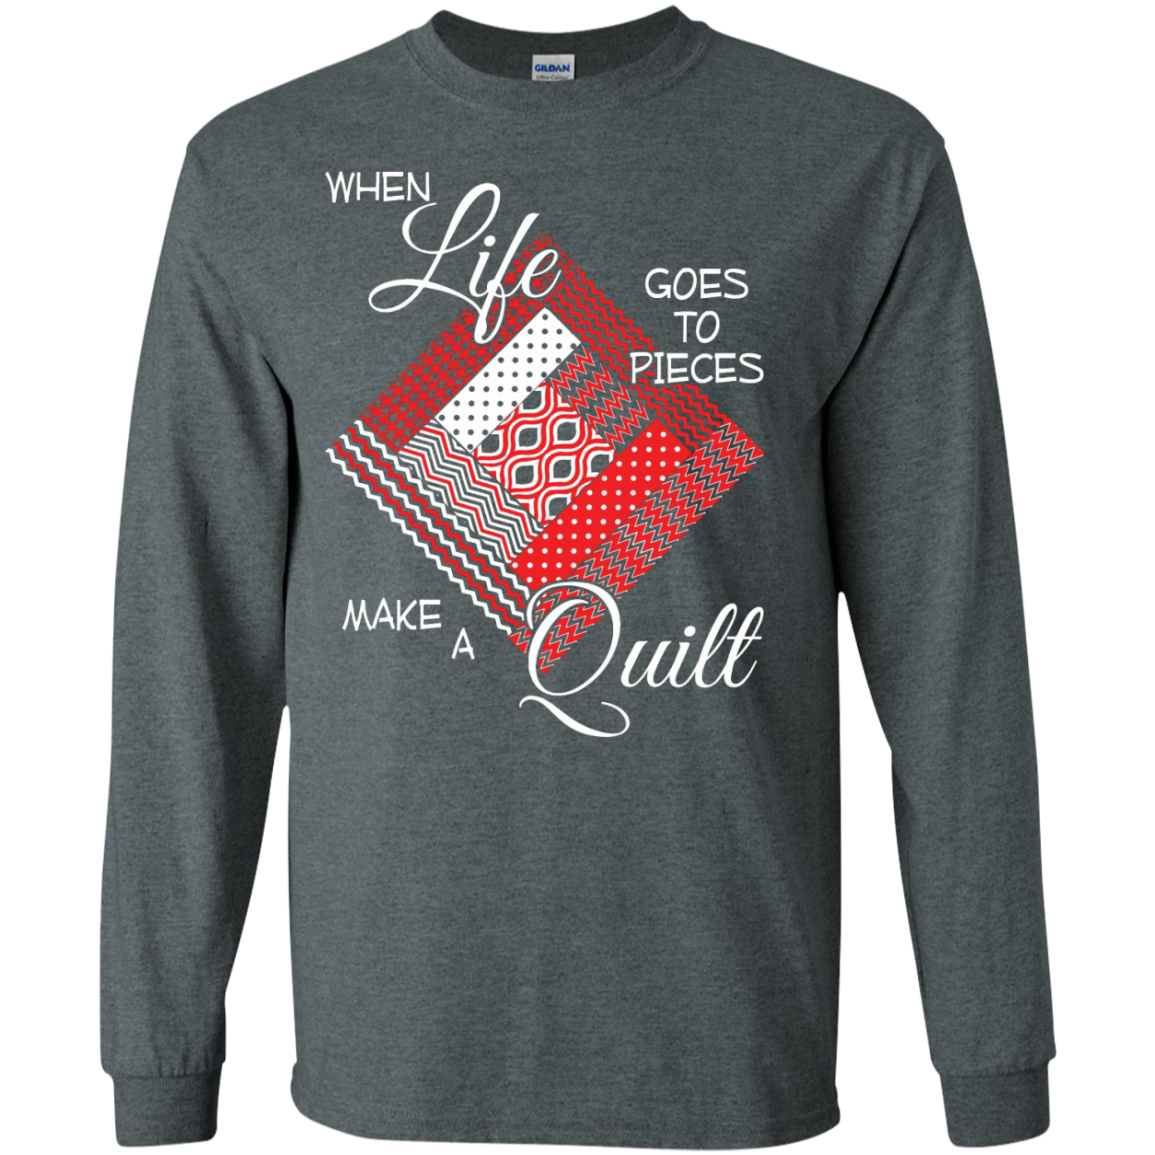 Make a Quilt (red) Long Sleeve Ultra Cotton T-Shirt - Crafter4Life - 4